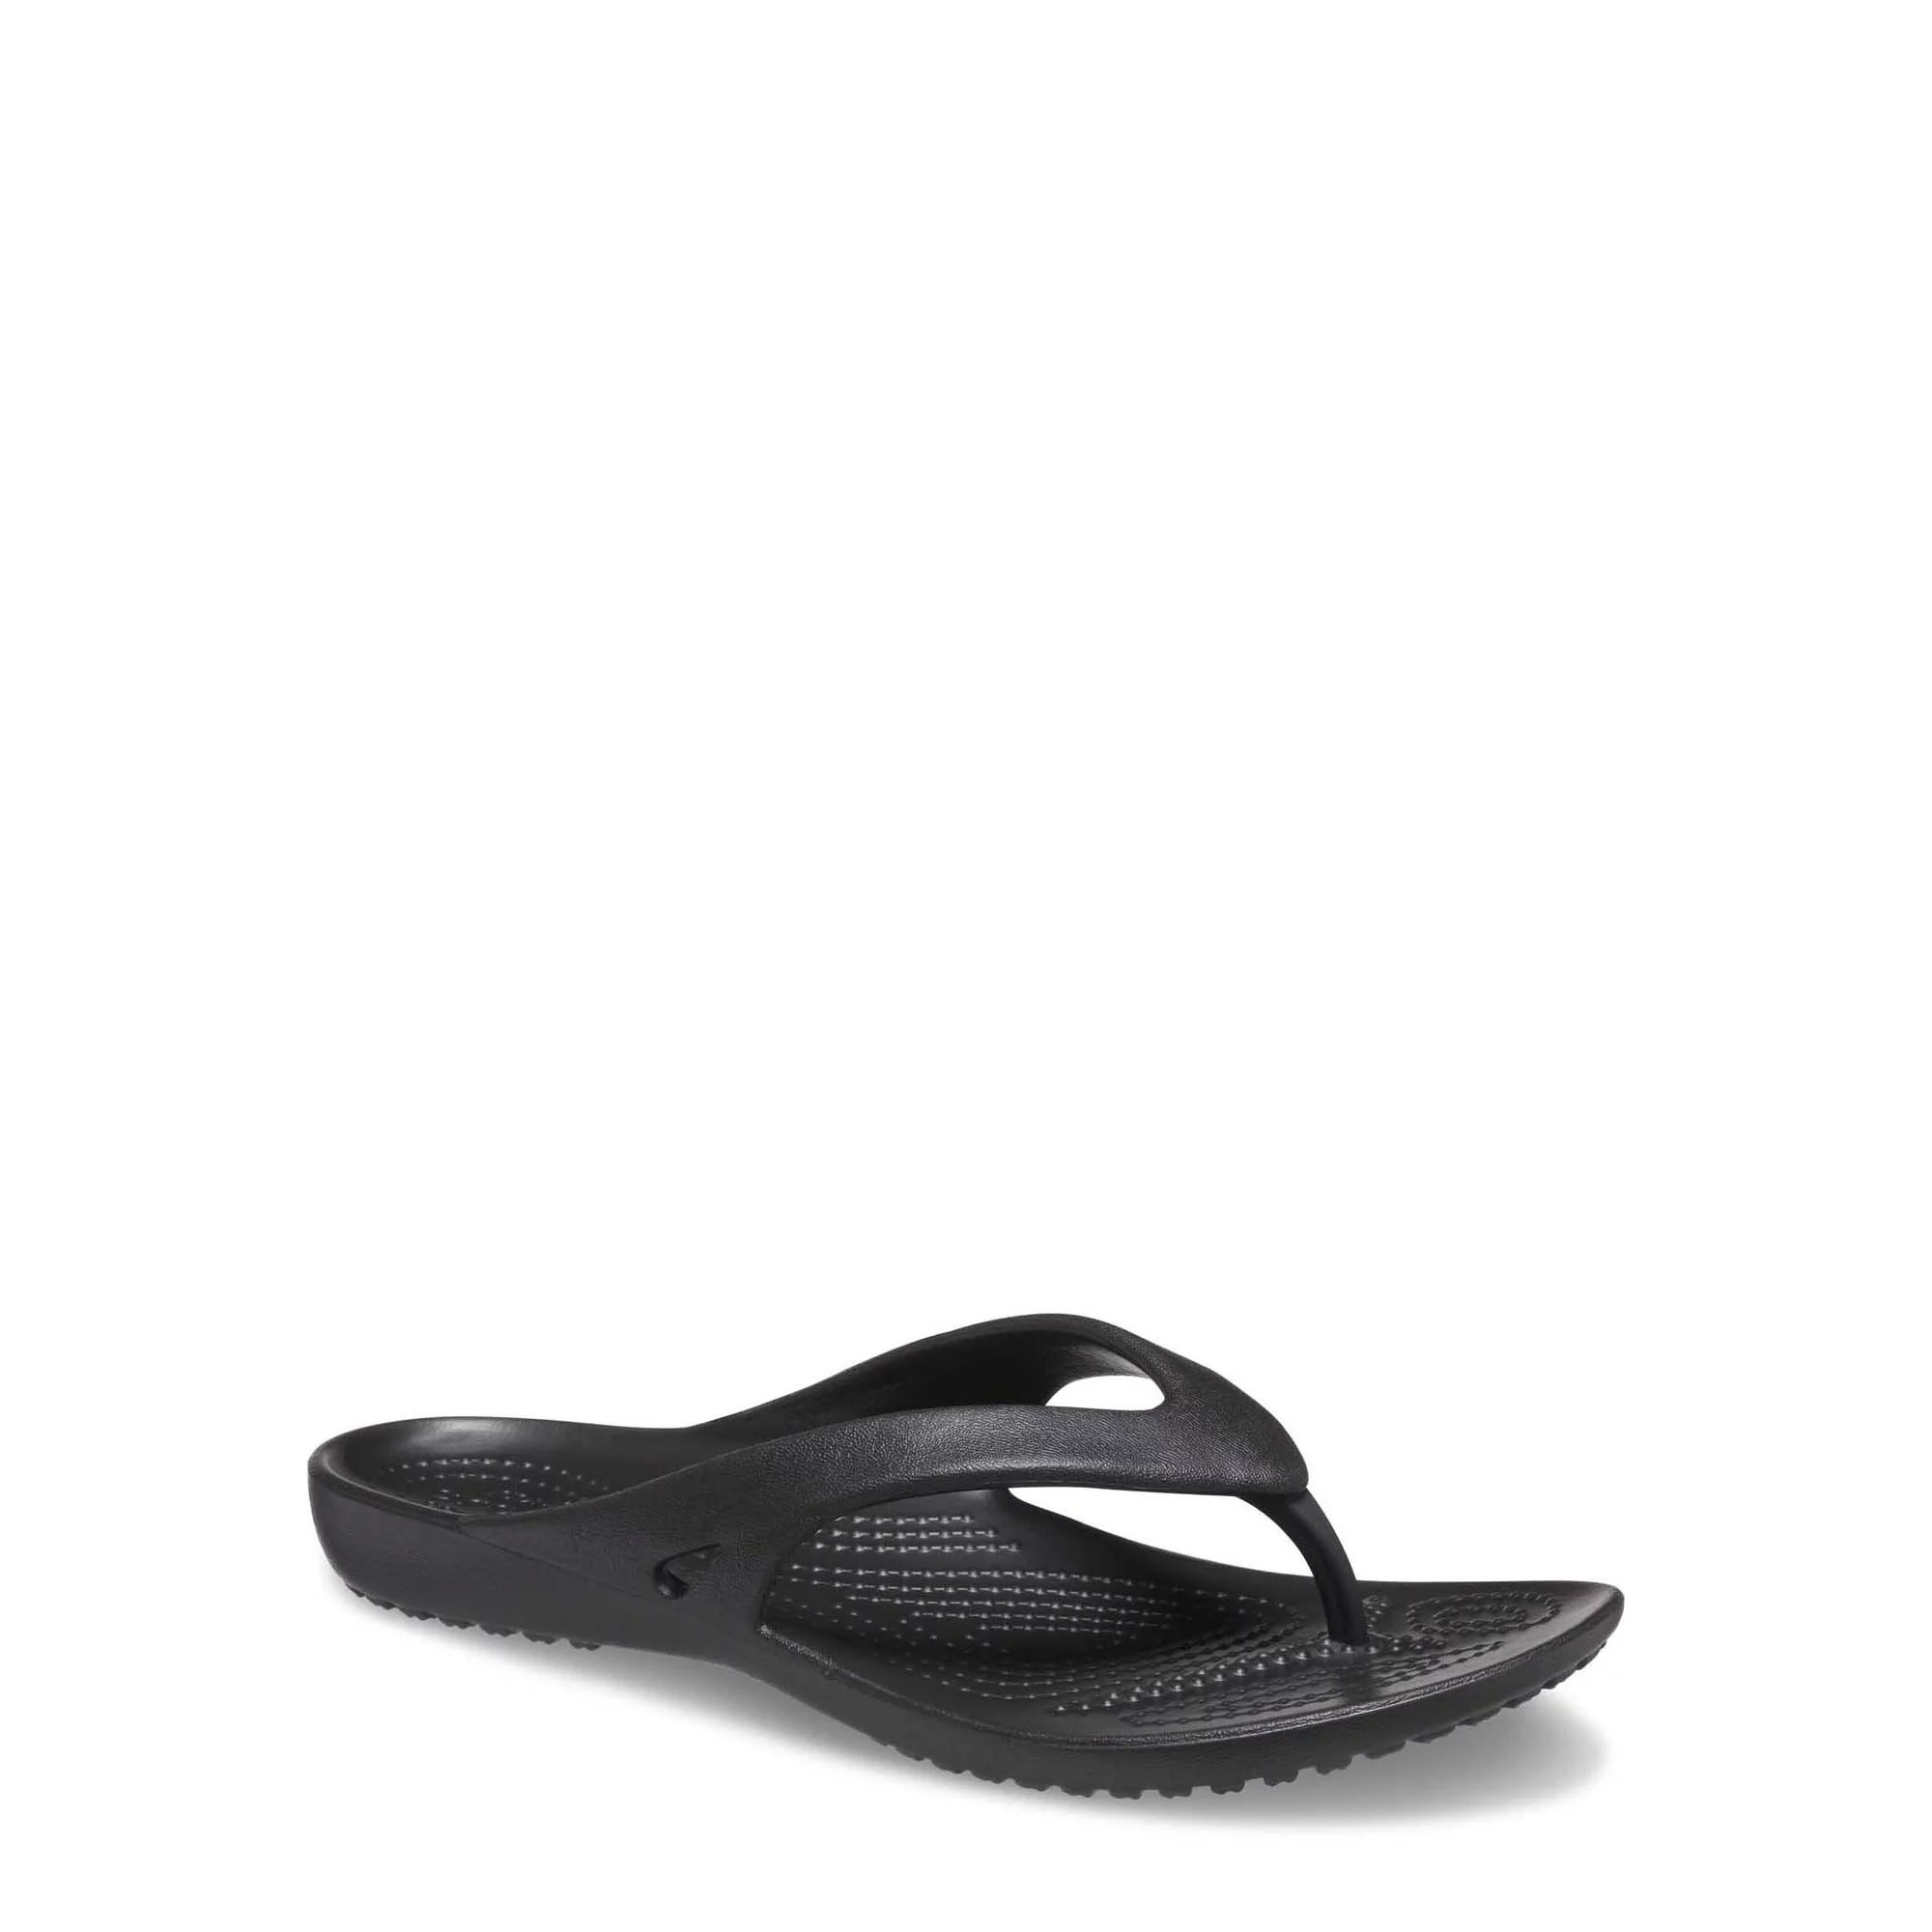 Crocs Women's Kadee II Flip Thong Sandals (Black, Size 6, 8-10) $9.88 + Free S&H w/ Walmart+ or $35+